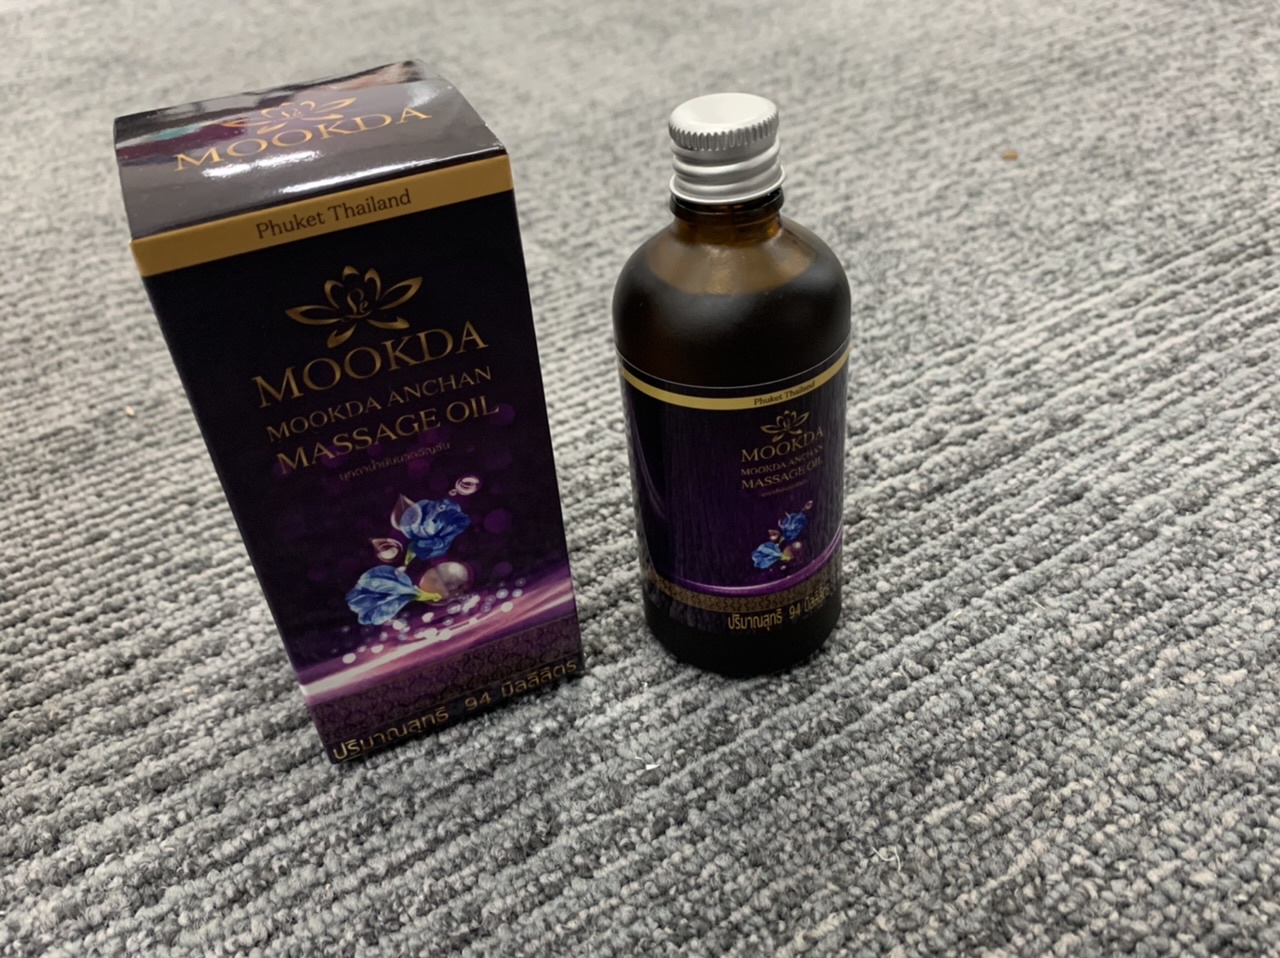 MOOKDA / MOOKDAアンチャンマッサージオイル 紫の公式商品情報｜美容・化粧品情報はアットコスメ